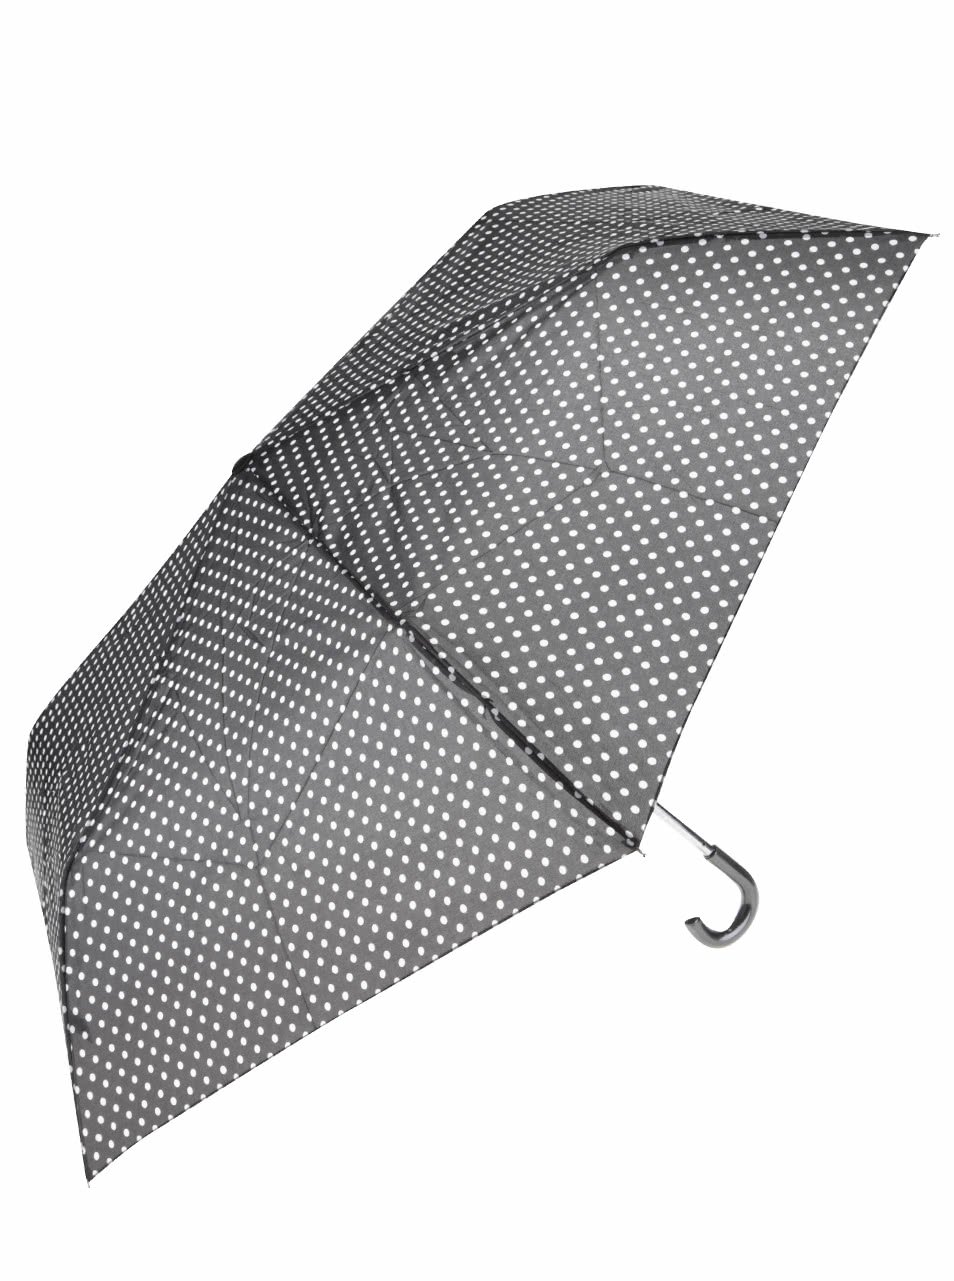 Černý skládací deštník s bílými puntíky Dorothy Perkins